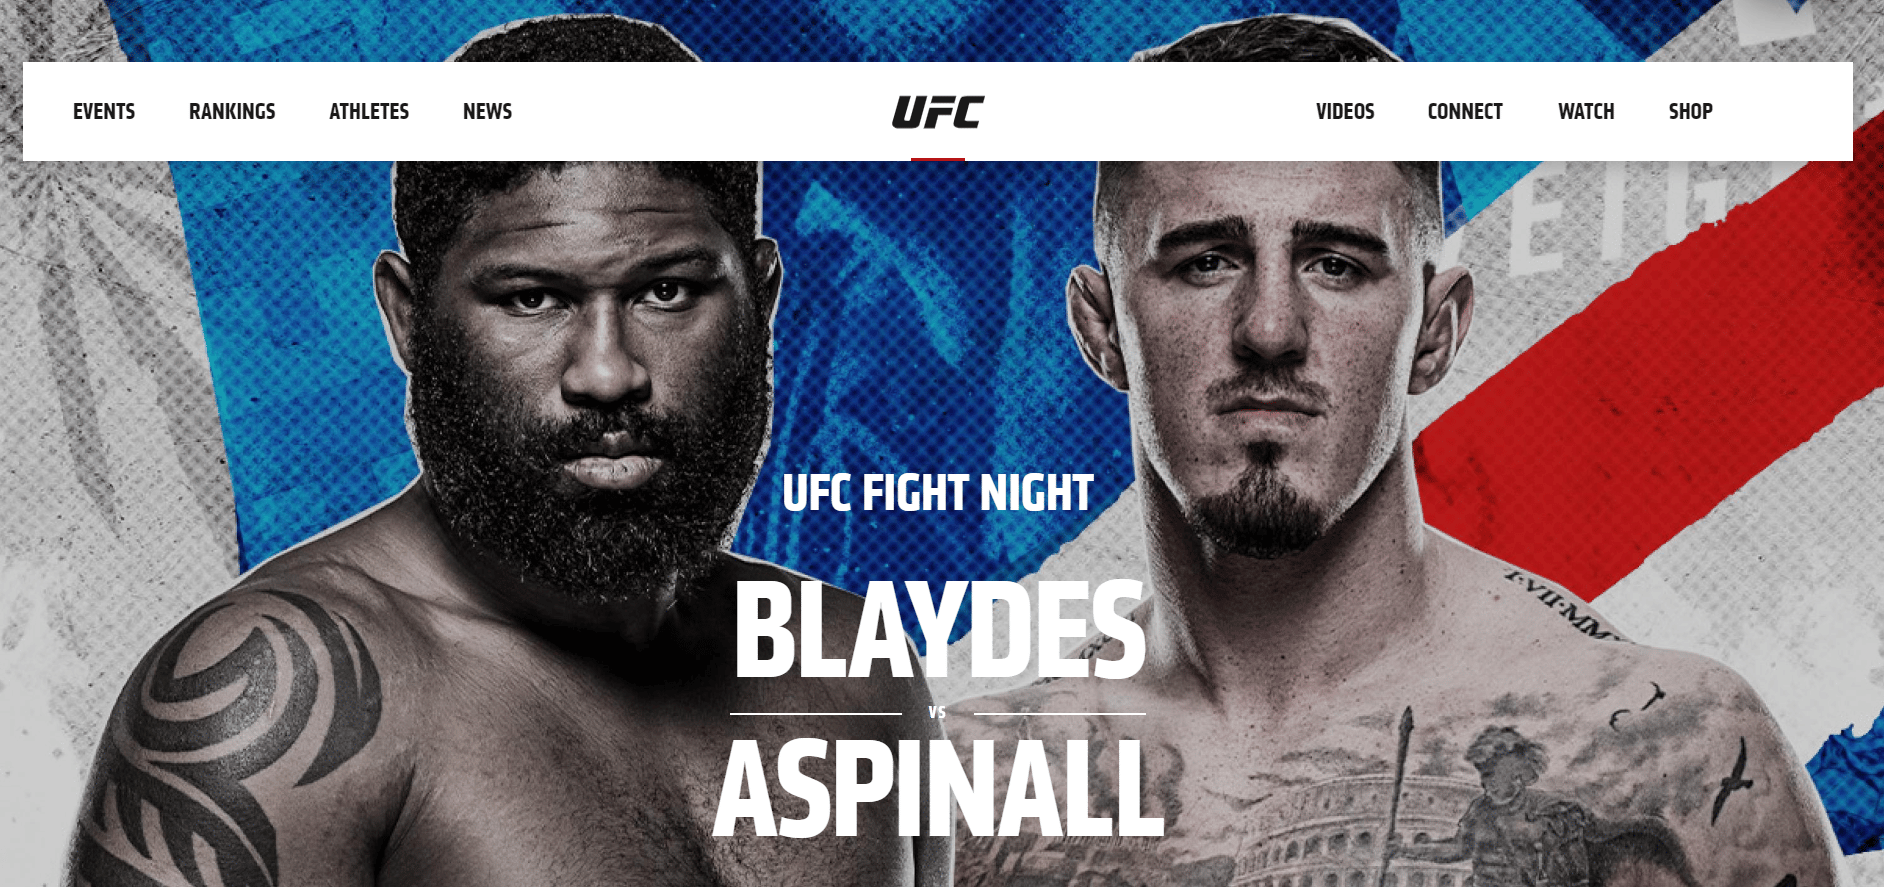 UFC Fight Night Blaydes vs Aspinall